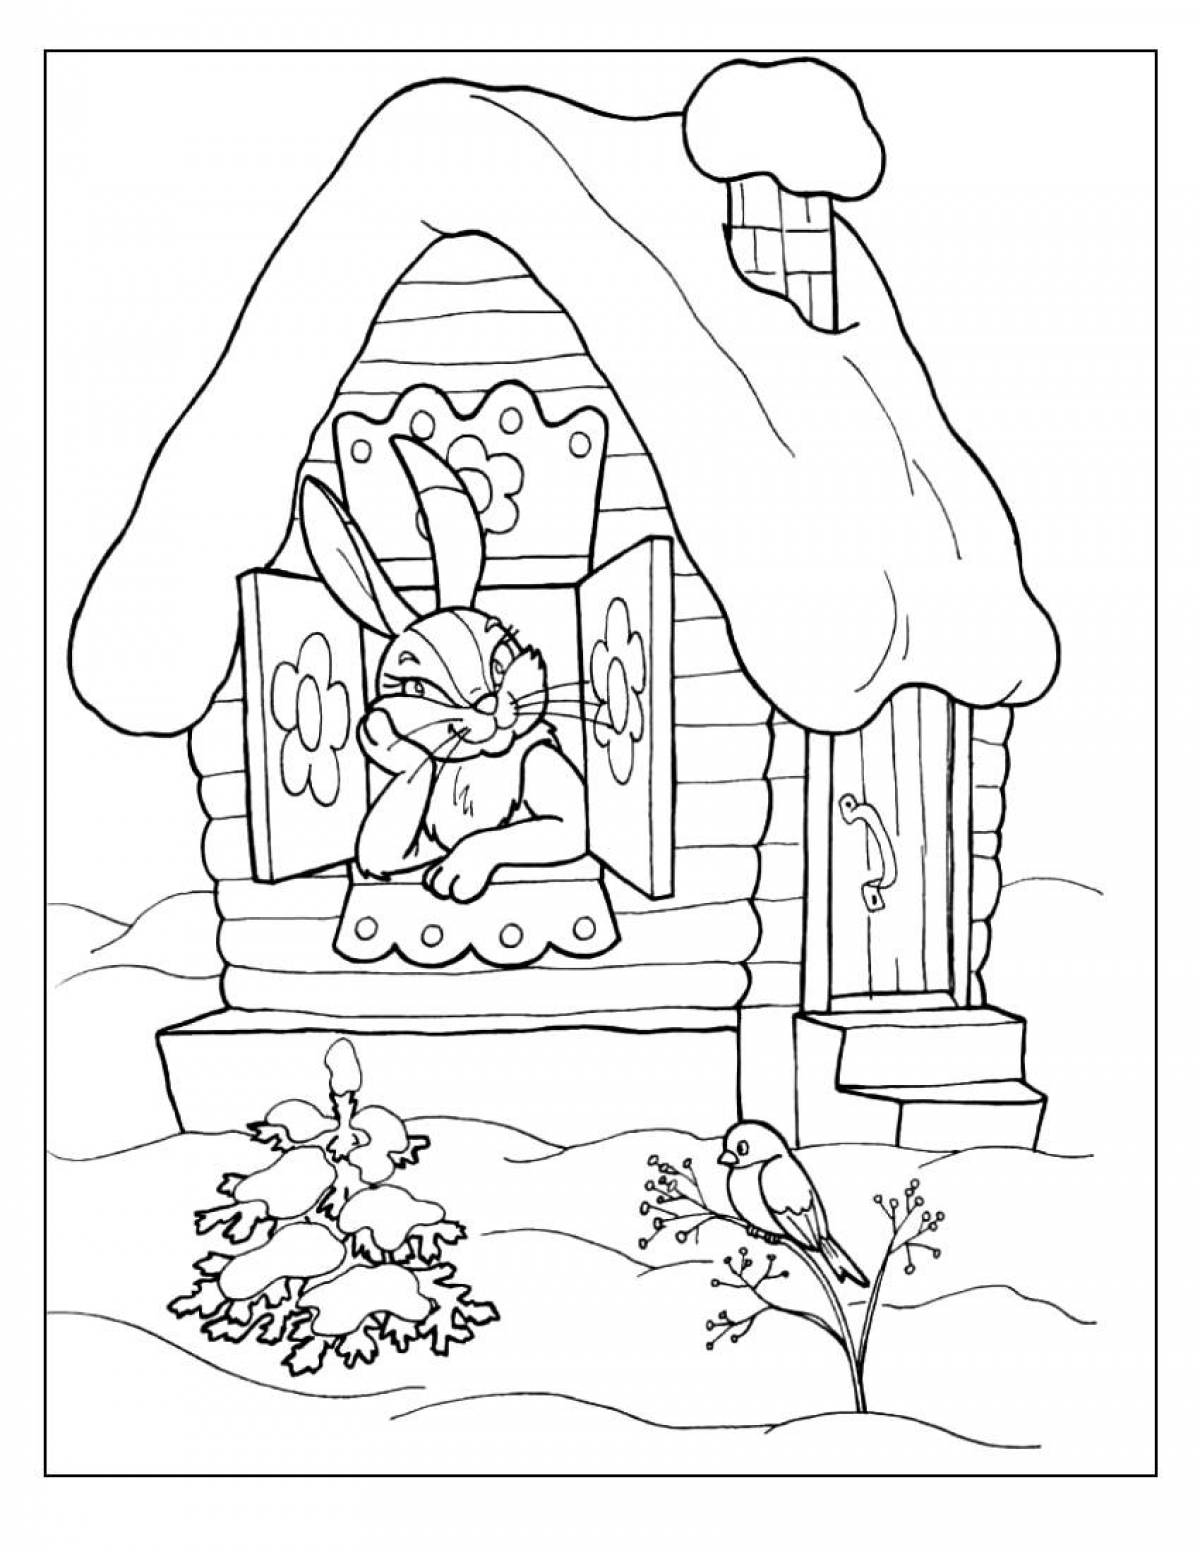 Hare in a hut